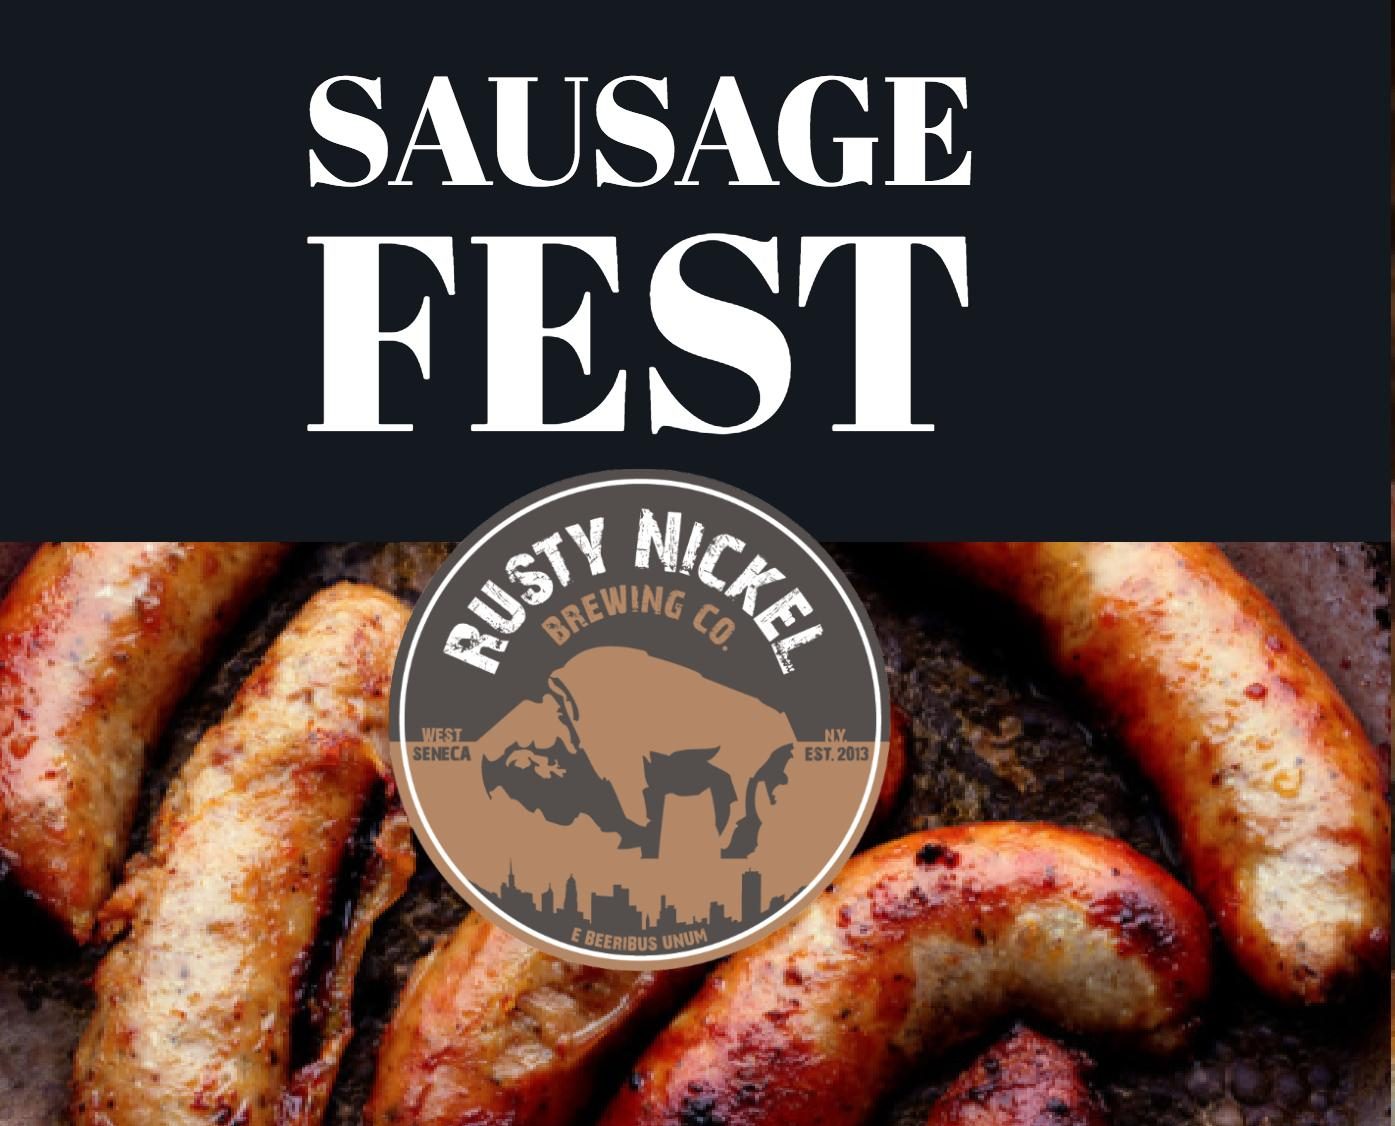 Sausage Fest - Rusty Nickel Brewing Co.